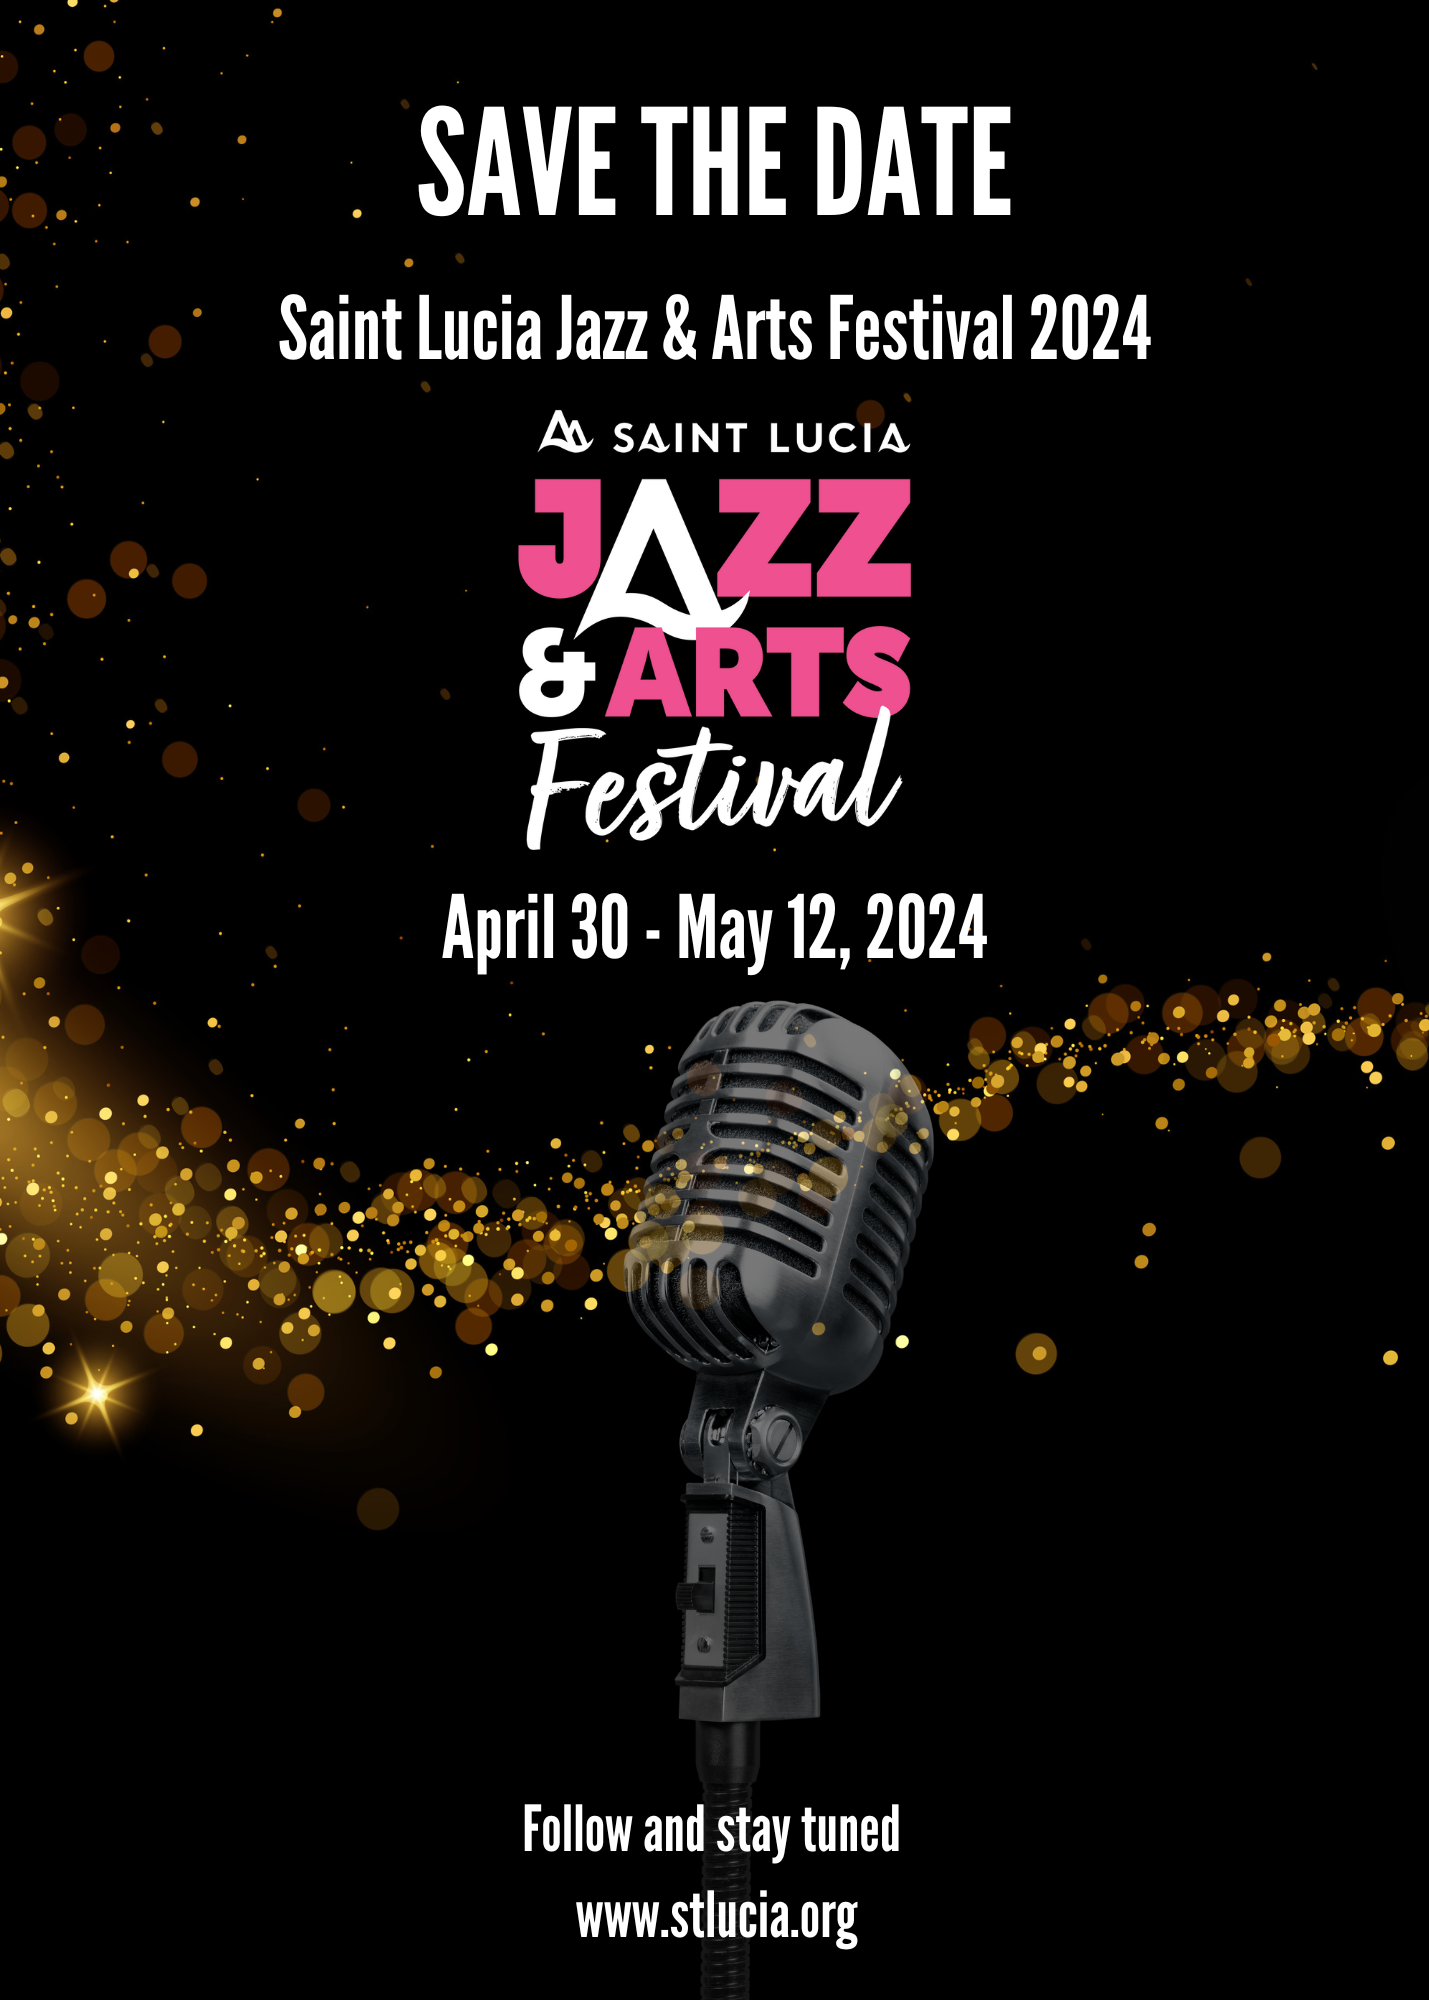 Saint Lucia Jazz & Arts Festival 2024 Saint Lucia